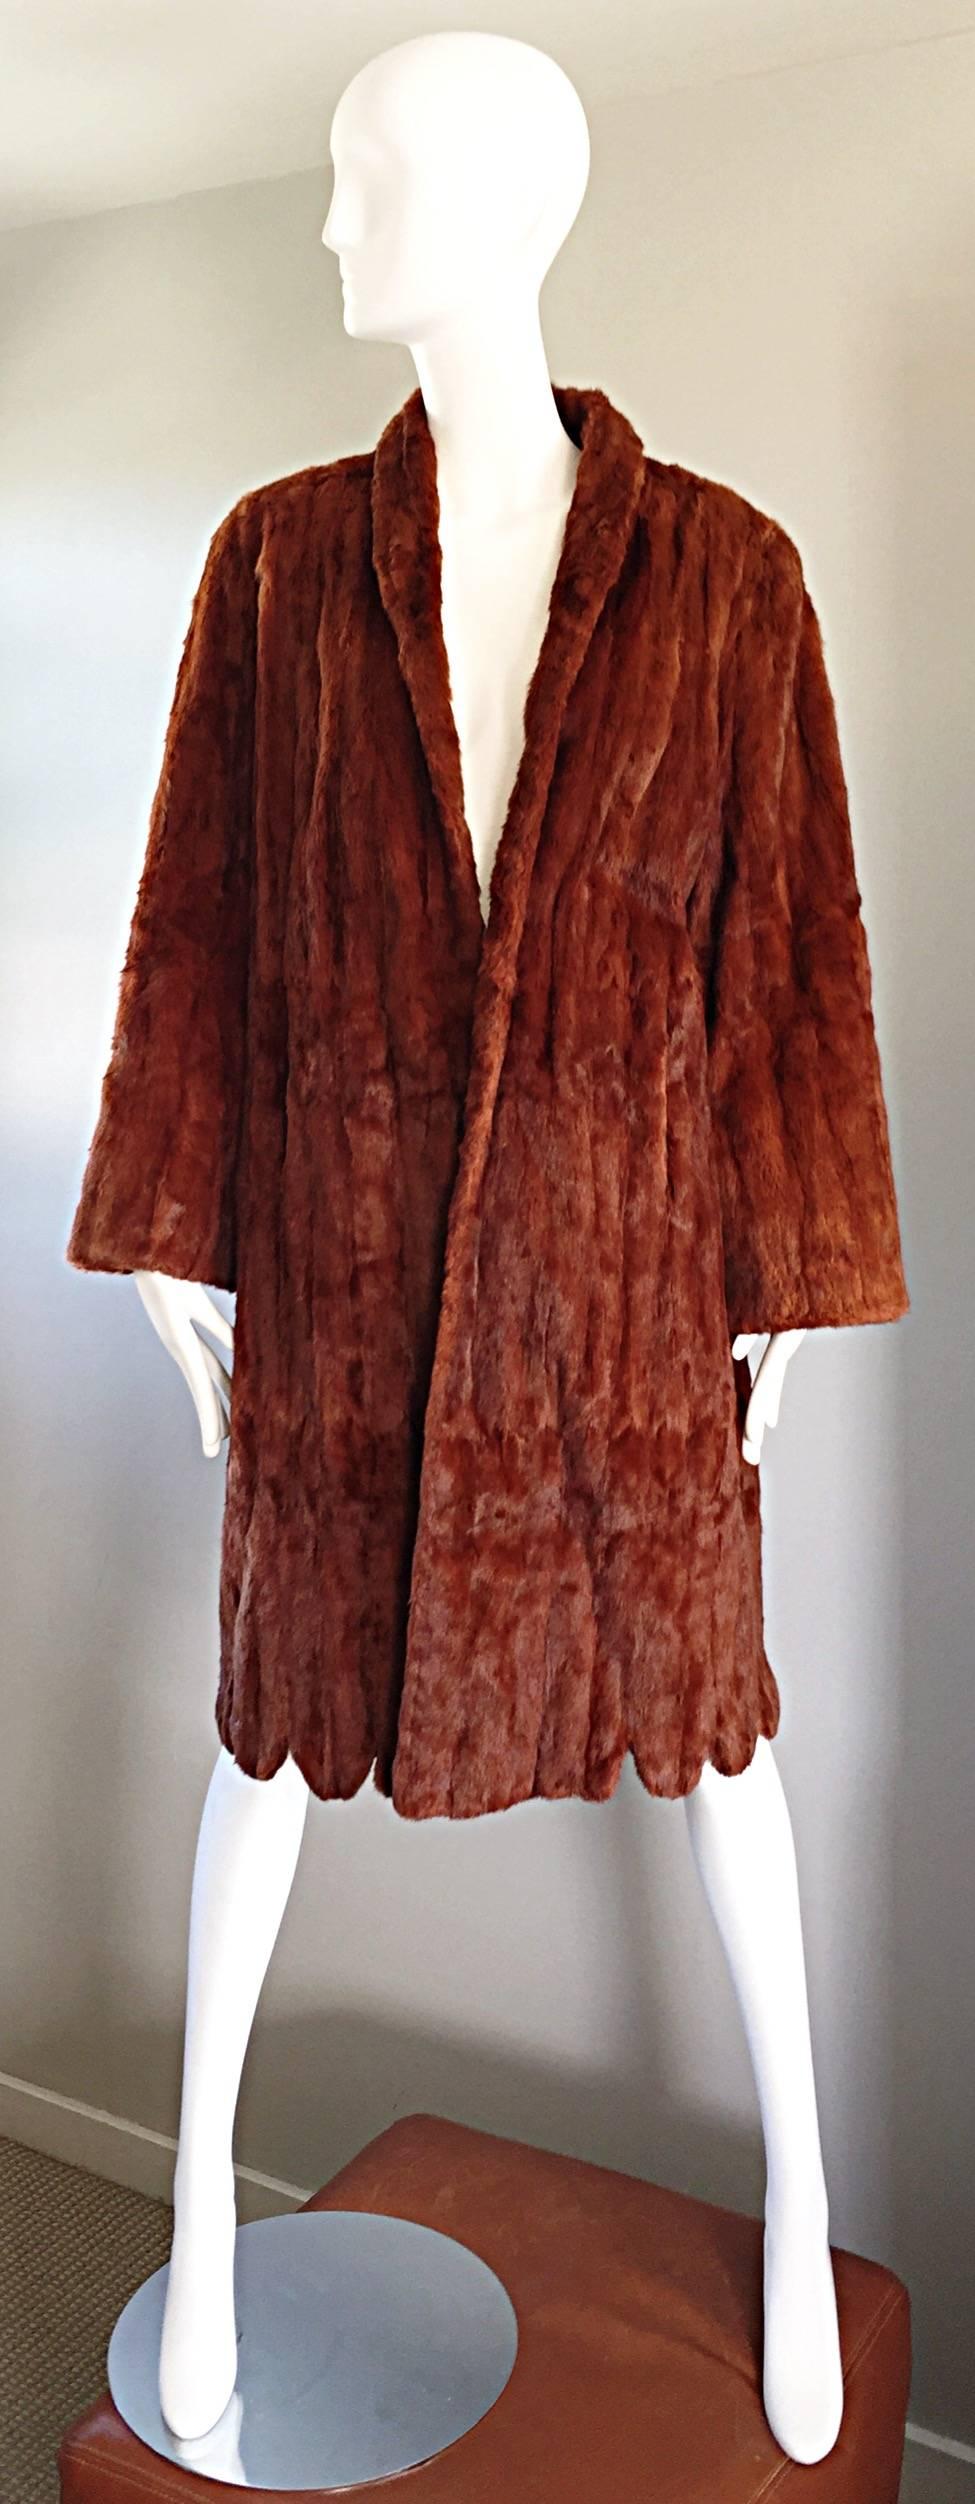 Rare 1940s Ermine Summer Fur Luxurious Honey Brown Jacket Coat Scalloped Edges For Sale 3